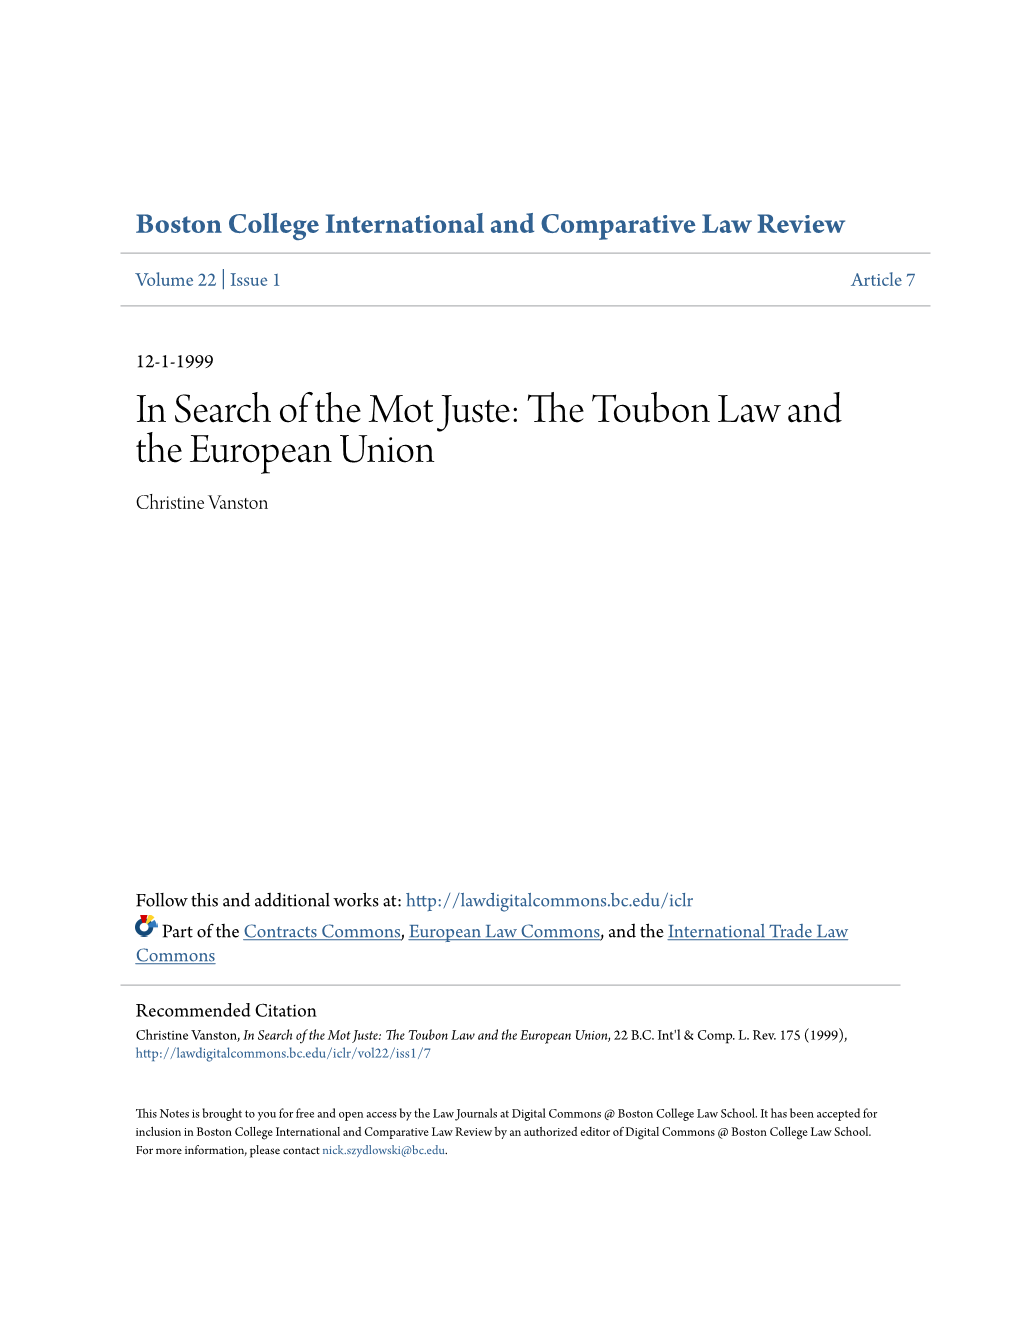 The Toubon Law and the European Union, 22 B.C